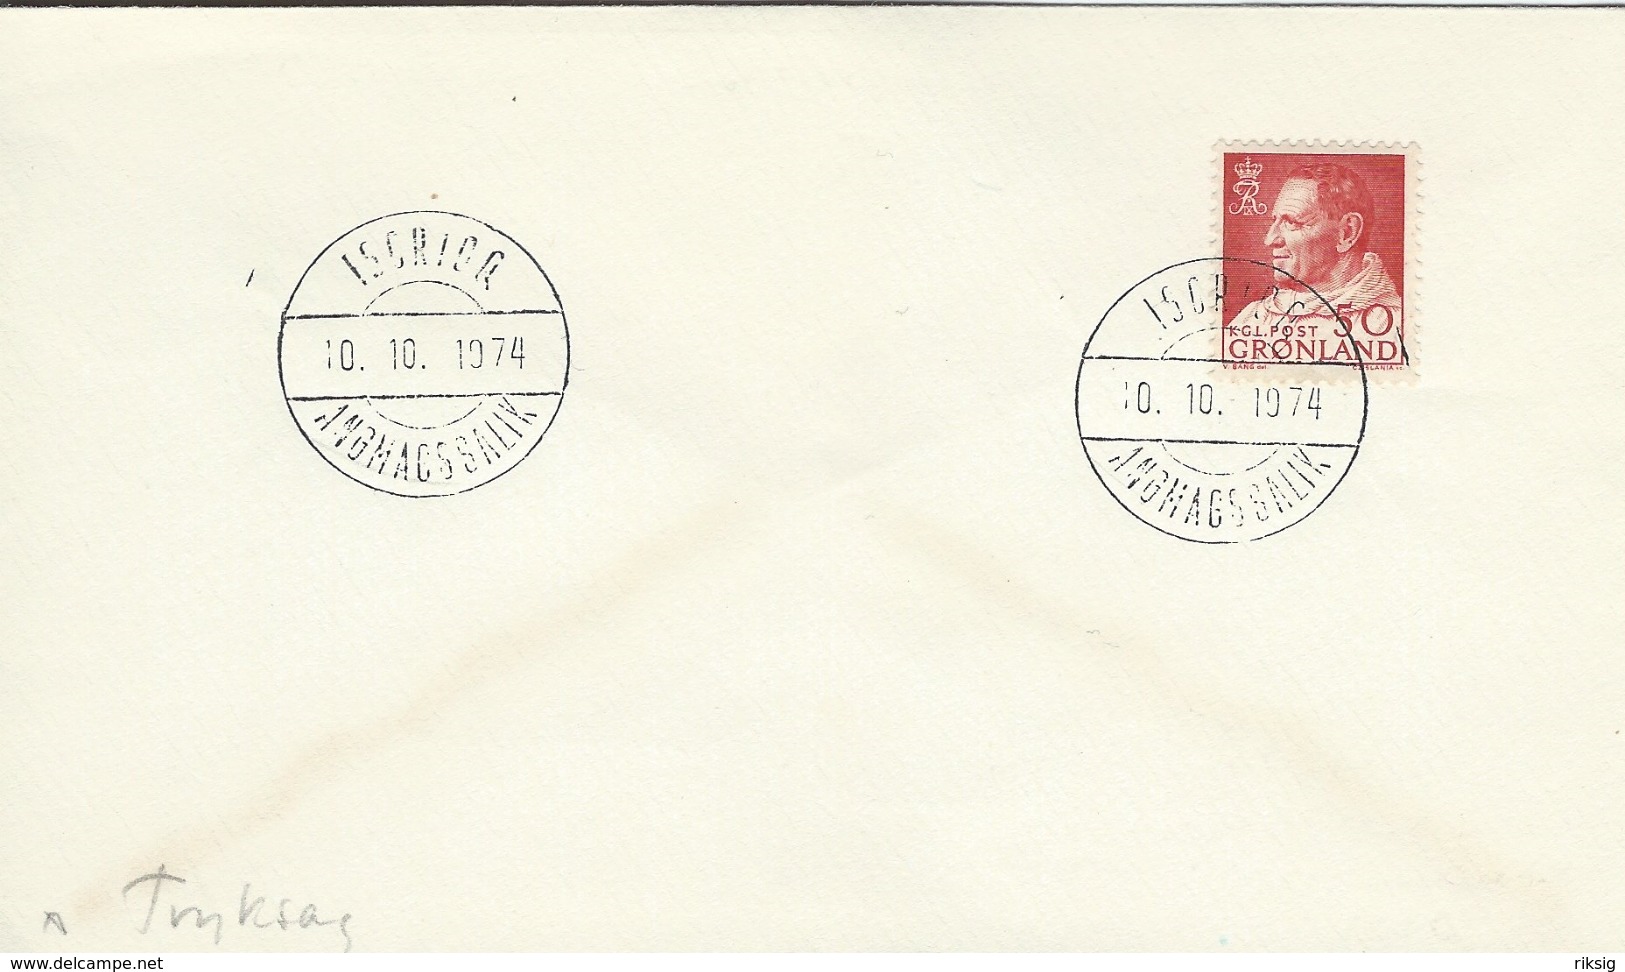 Greenland - Postmark   Isortoq  Angmagssalik 10 -10 - 1974   H-1066 - Marcophilie